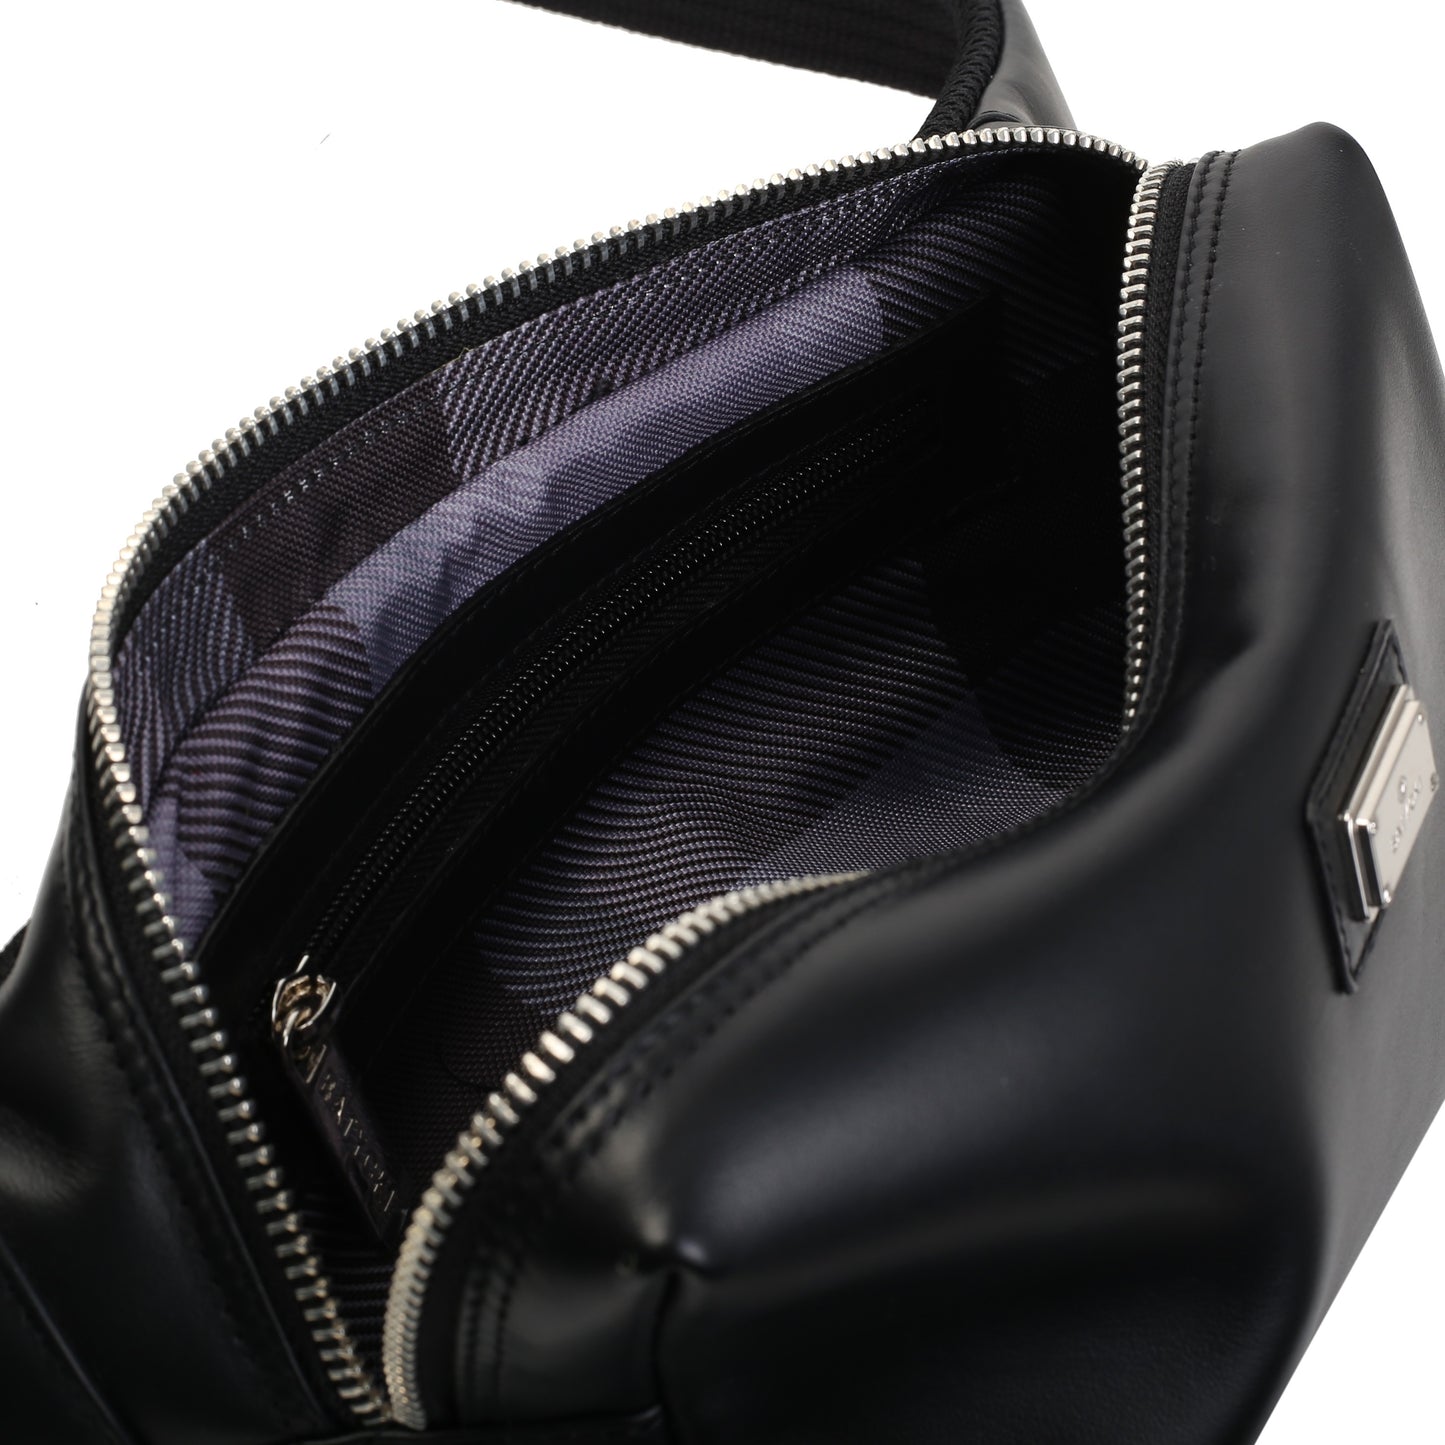 Men's leather press bag BLACK